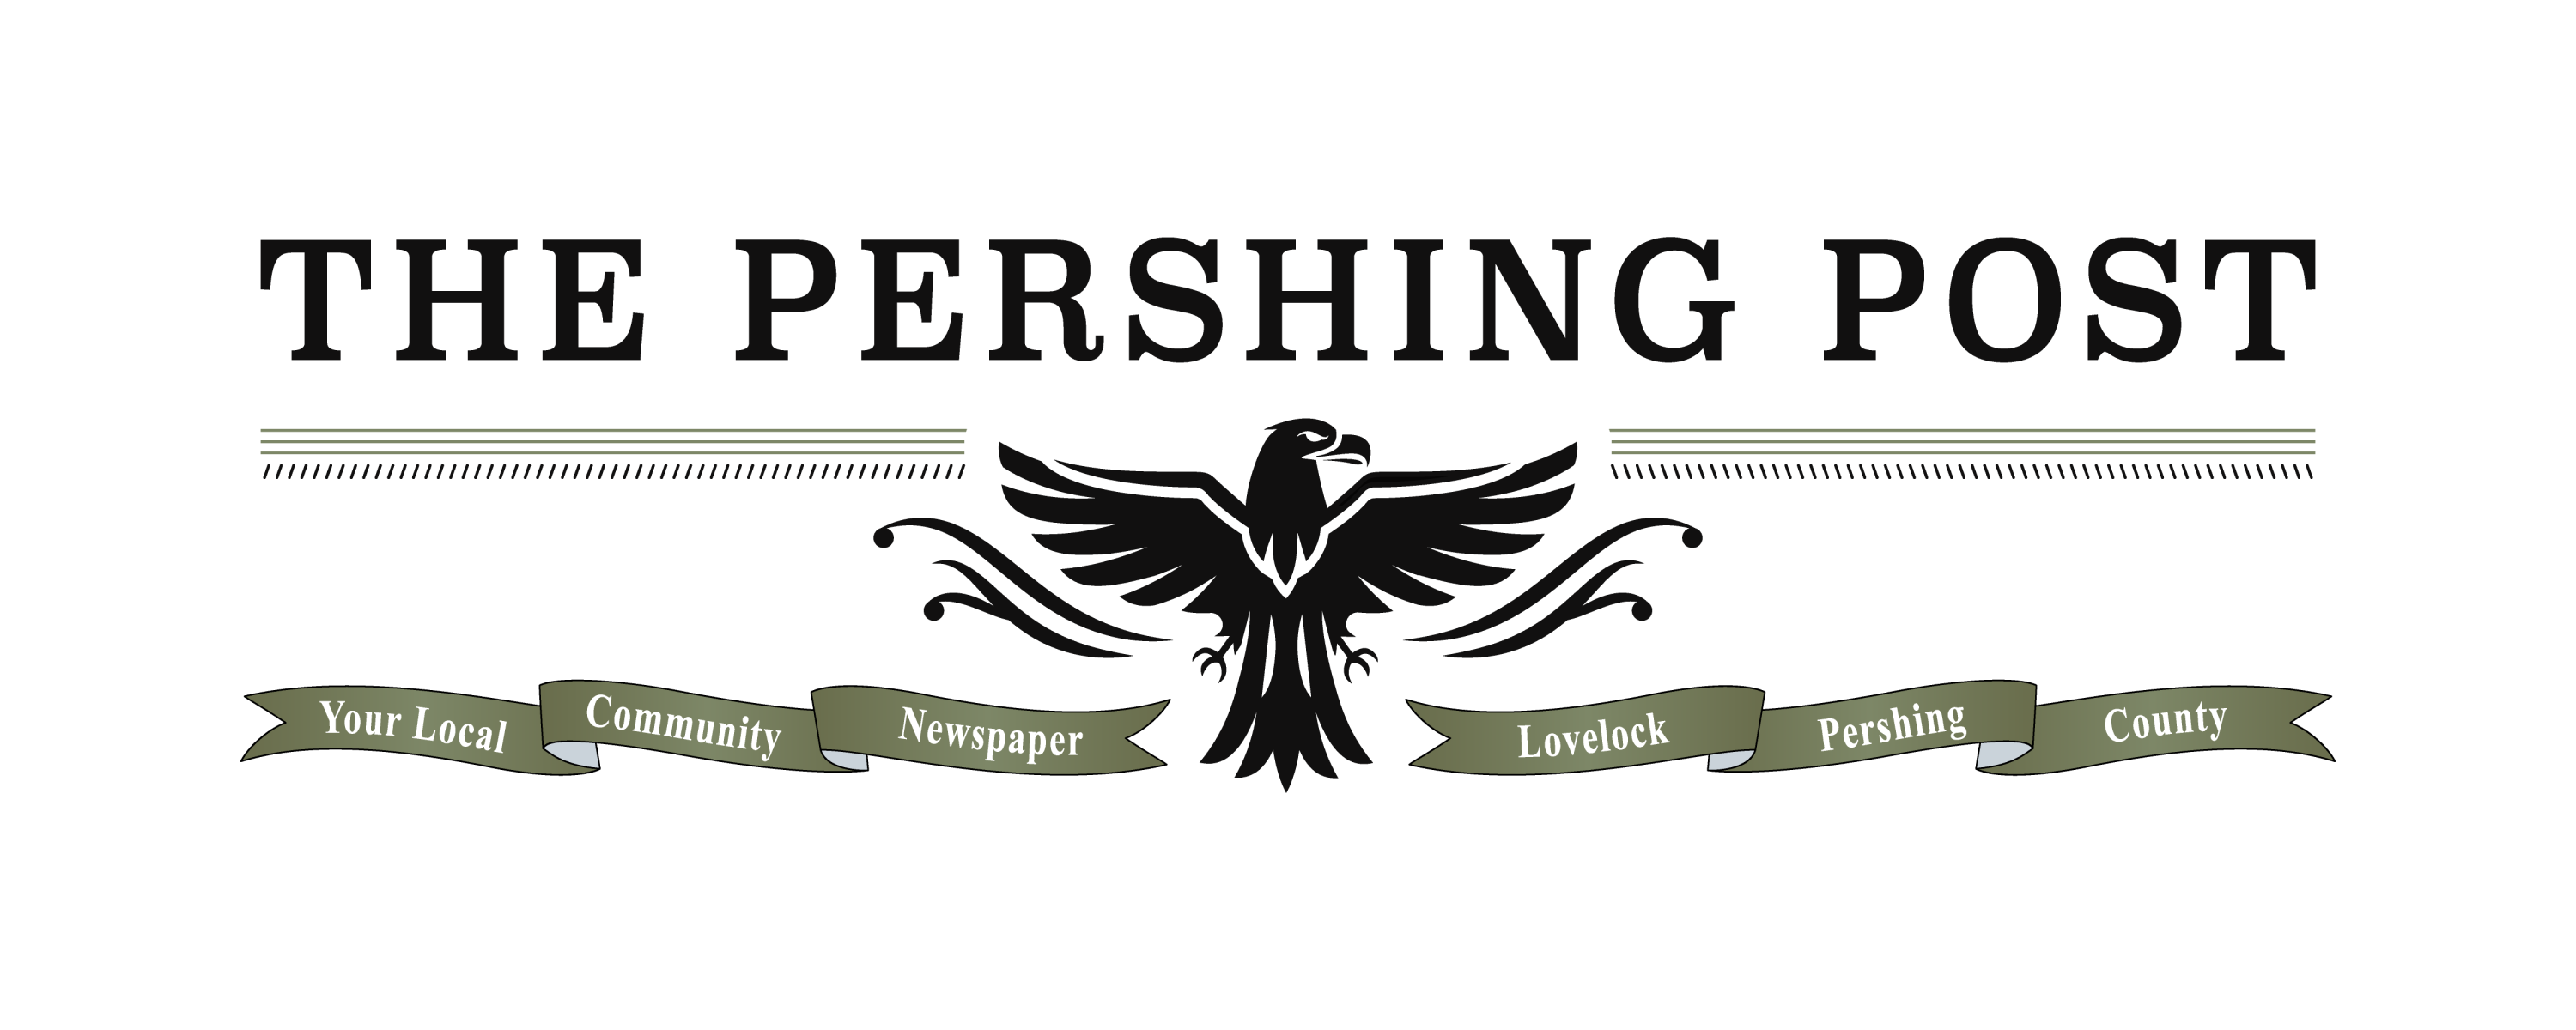 The Pershing Post logo